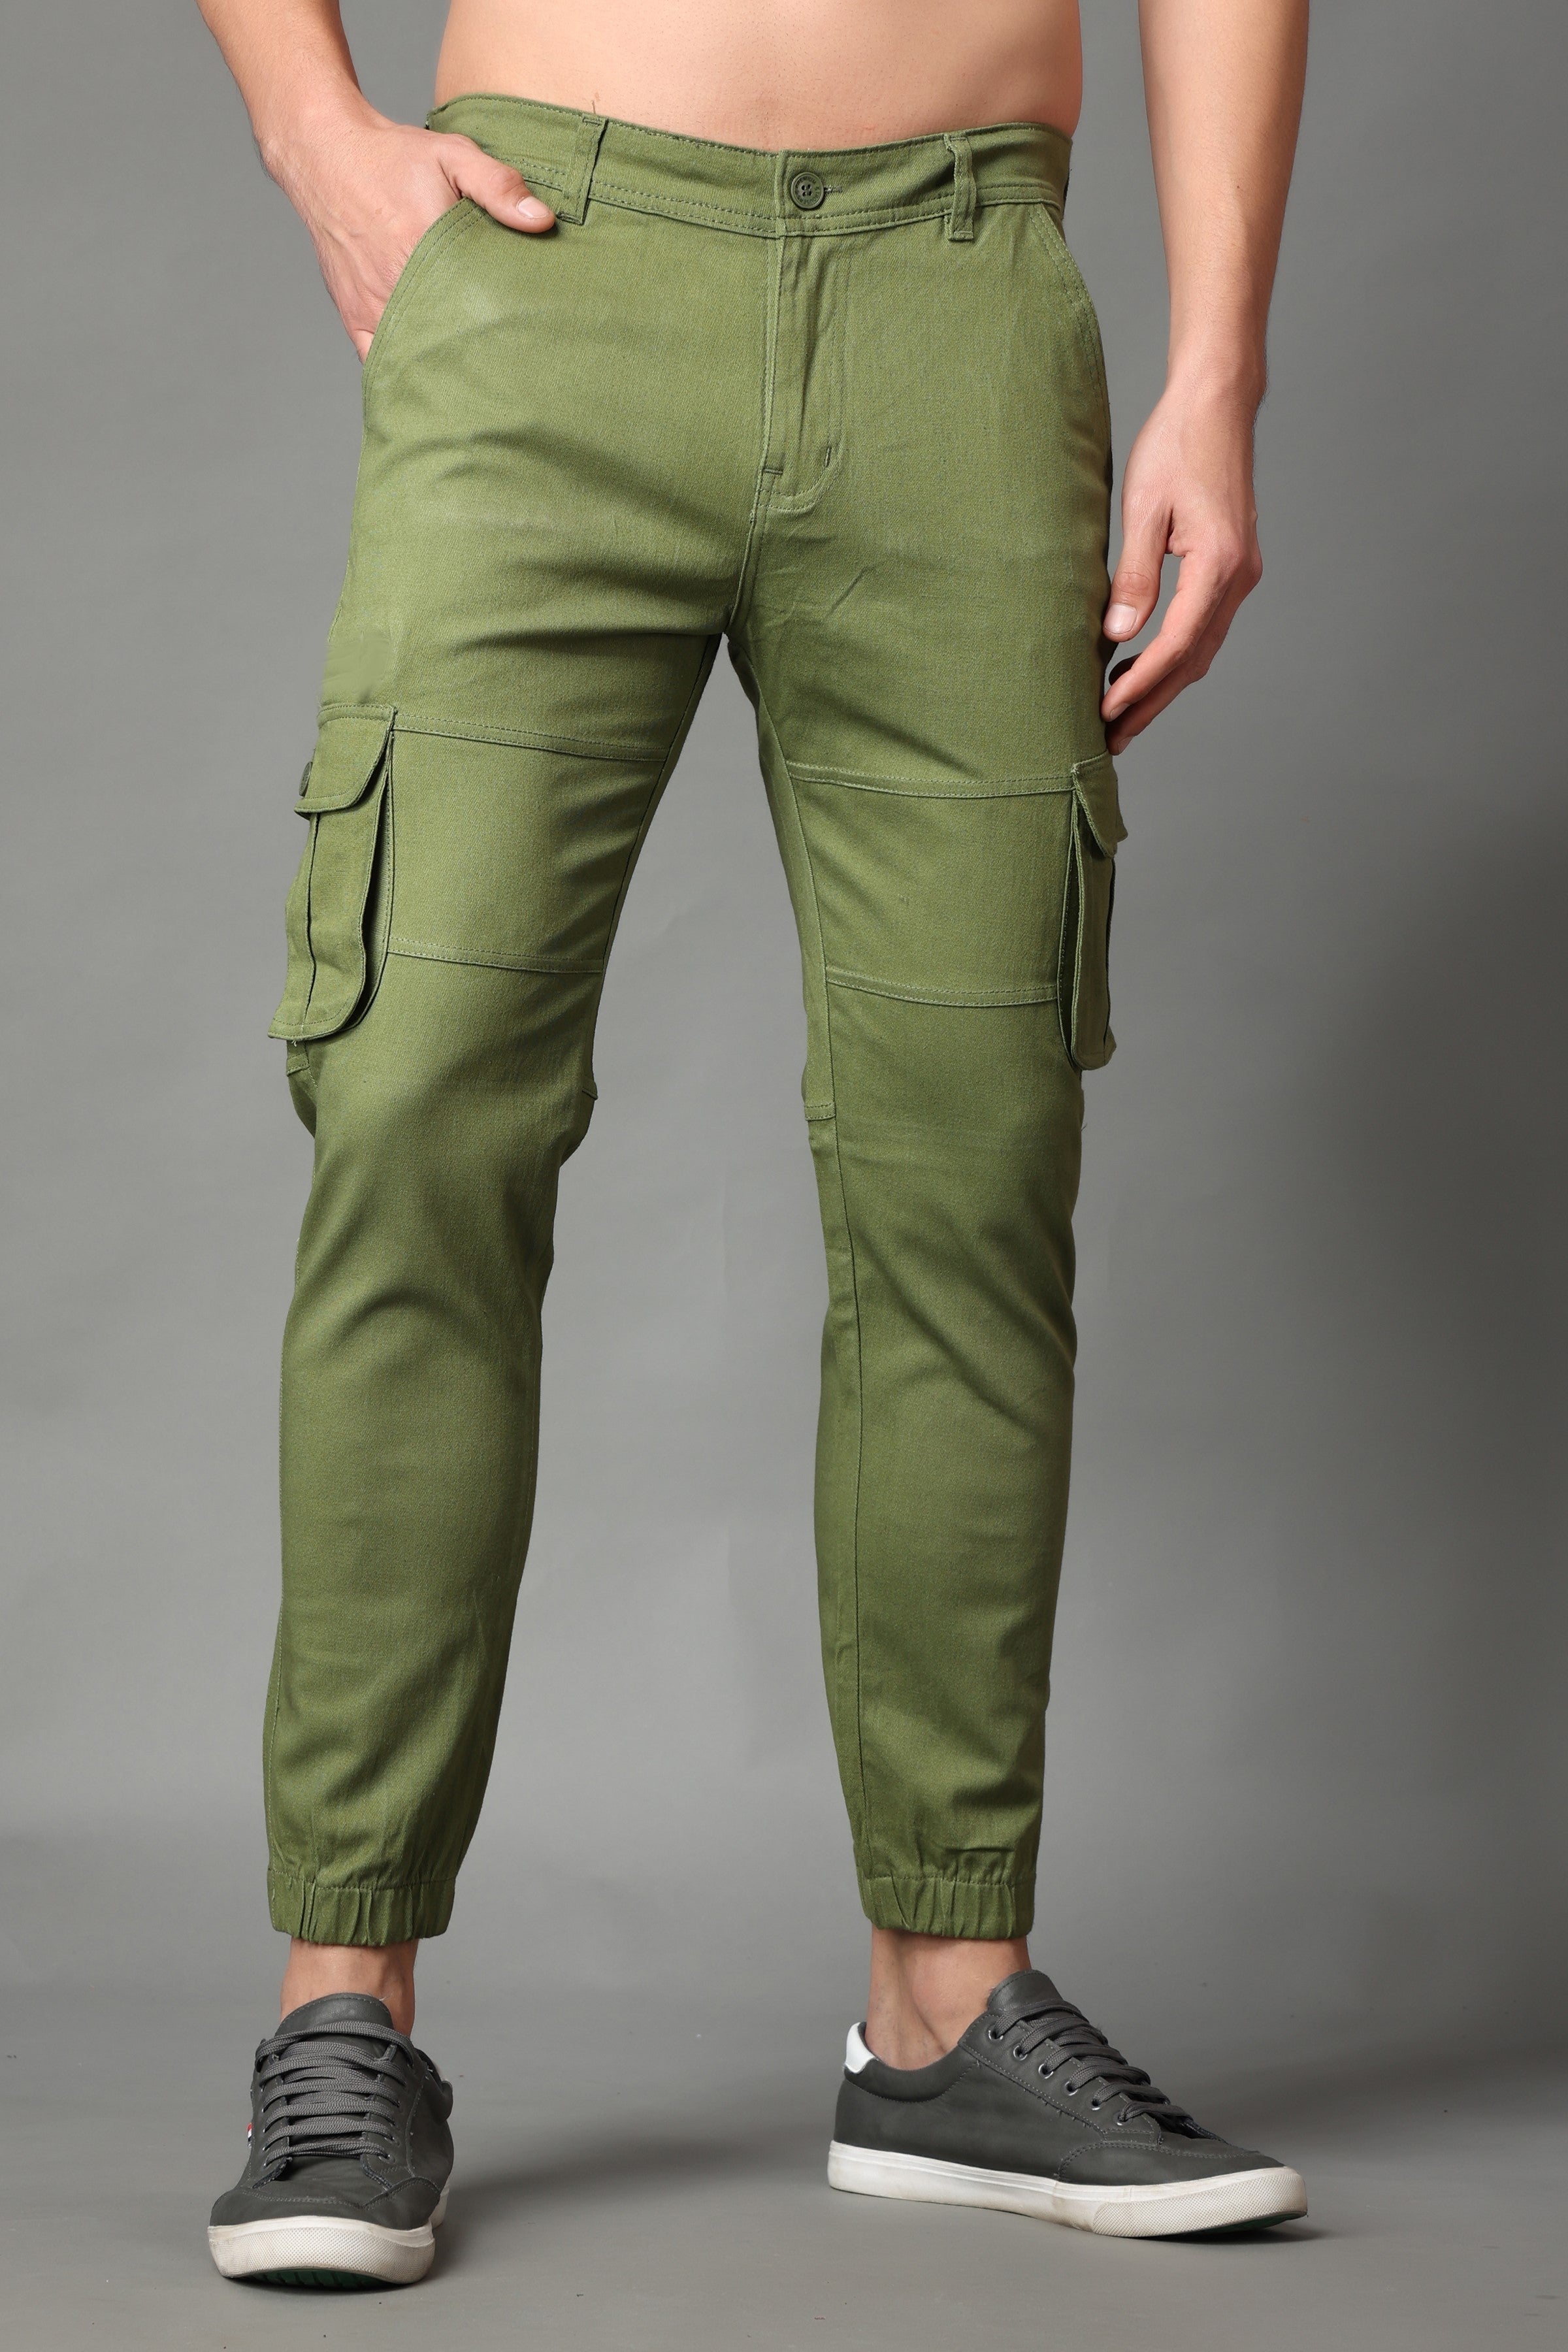 B91xZ Men Cargo Pants Seasons Solid Leisure Pants Trousers Multi-pocket  Men's Tooling Color Four Men's pants Green,Size XL - Walmart.com